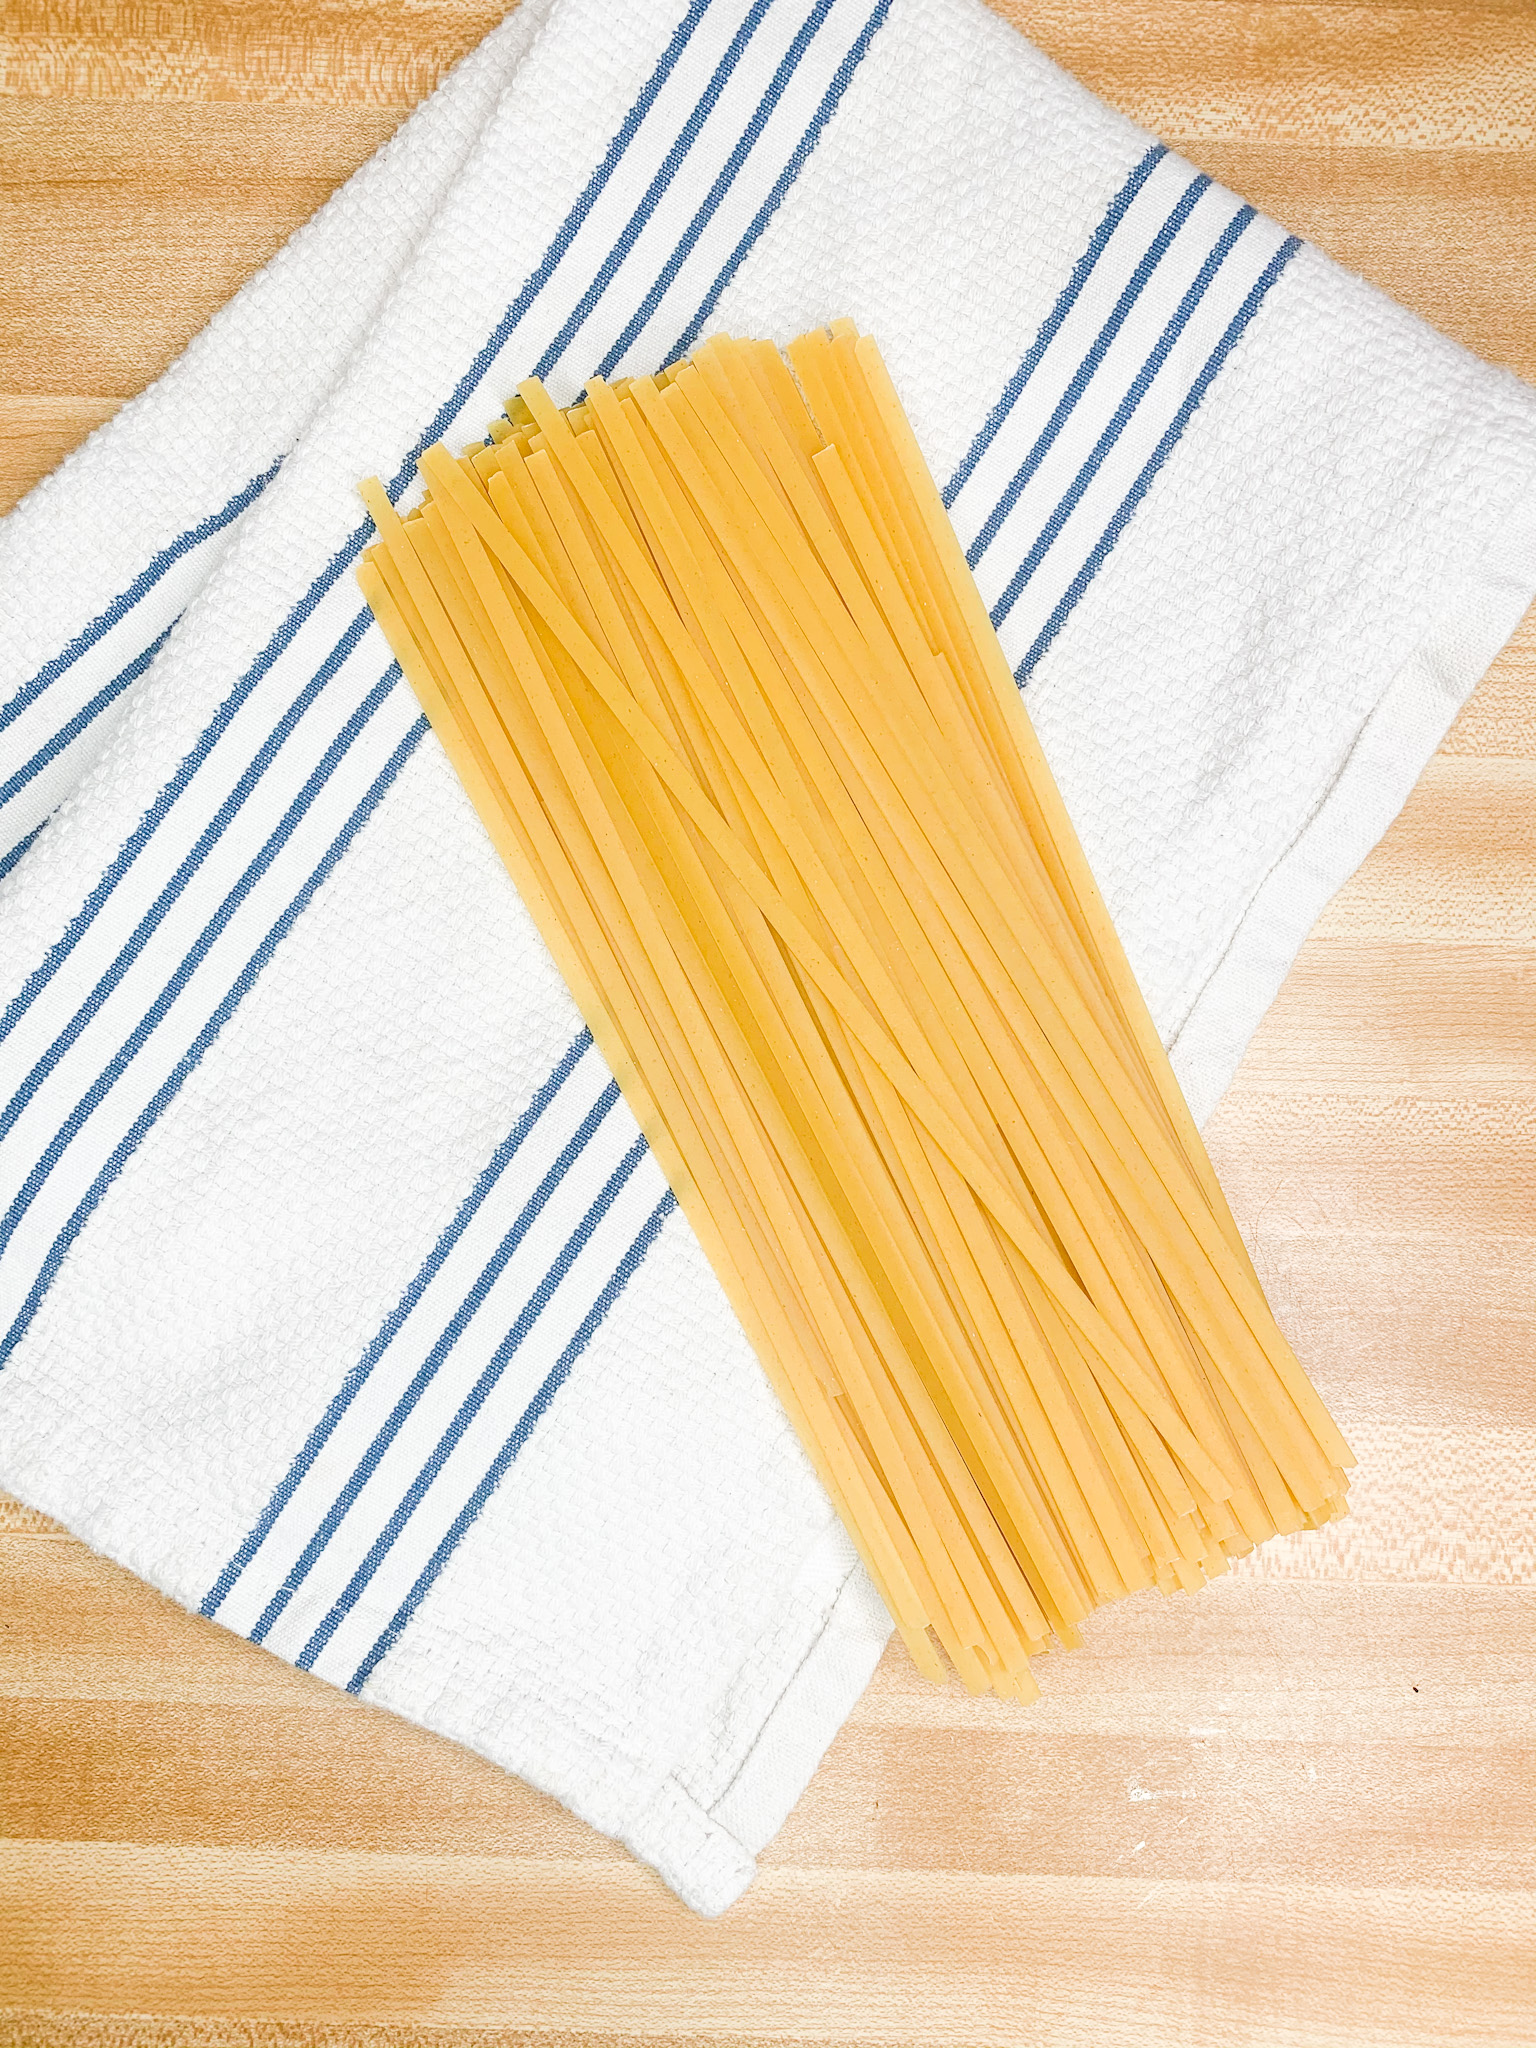 fettuccine noodles on a towel